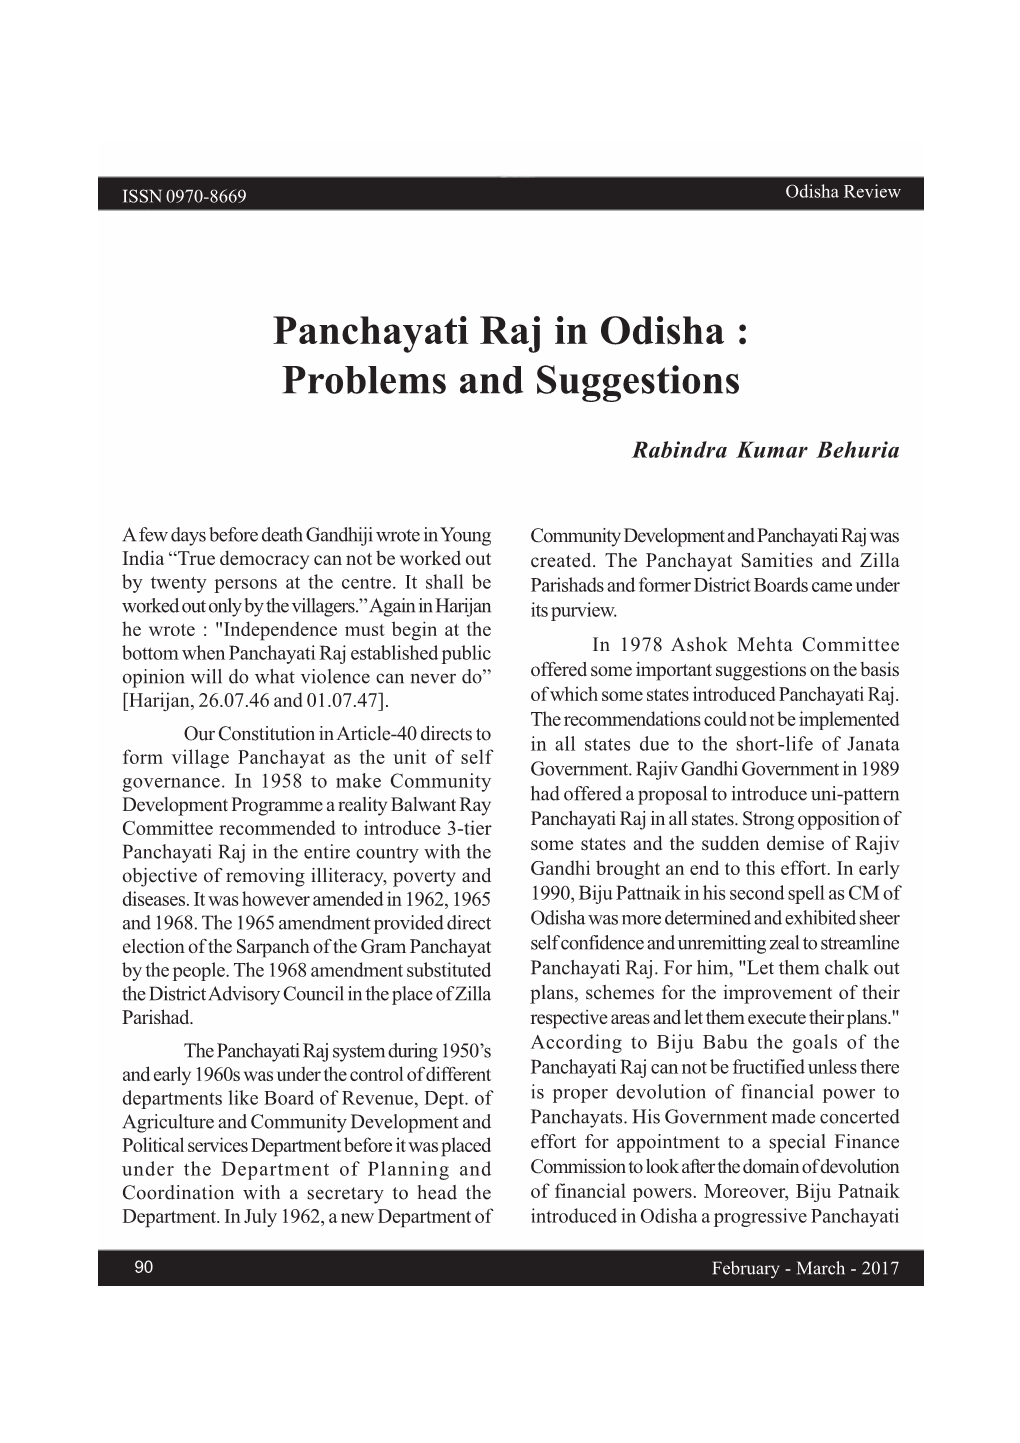 Panchayati Raj in Odisha : Problems and Suggestions